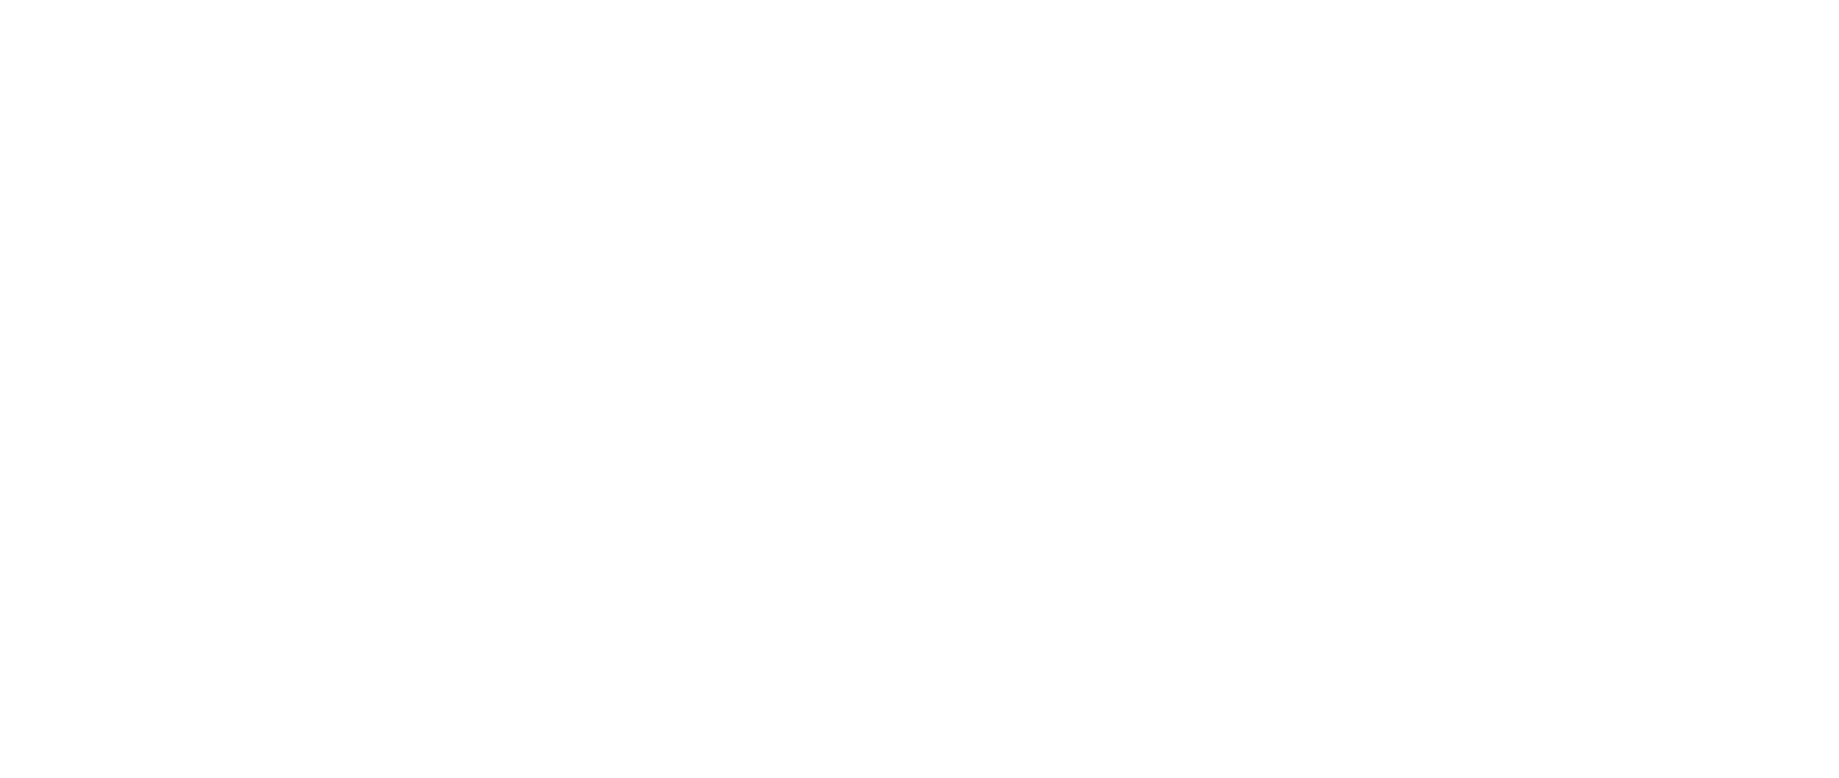 YuFu Organic Ramen